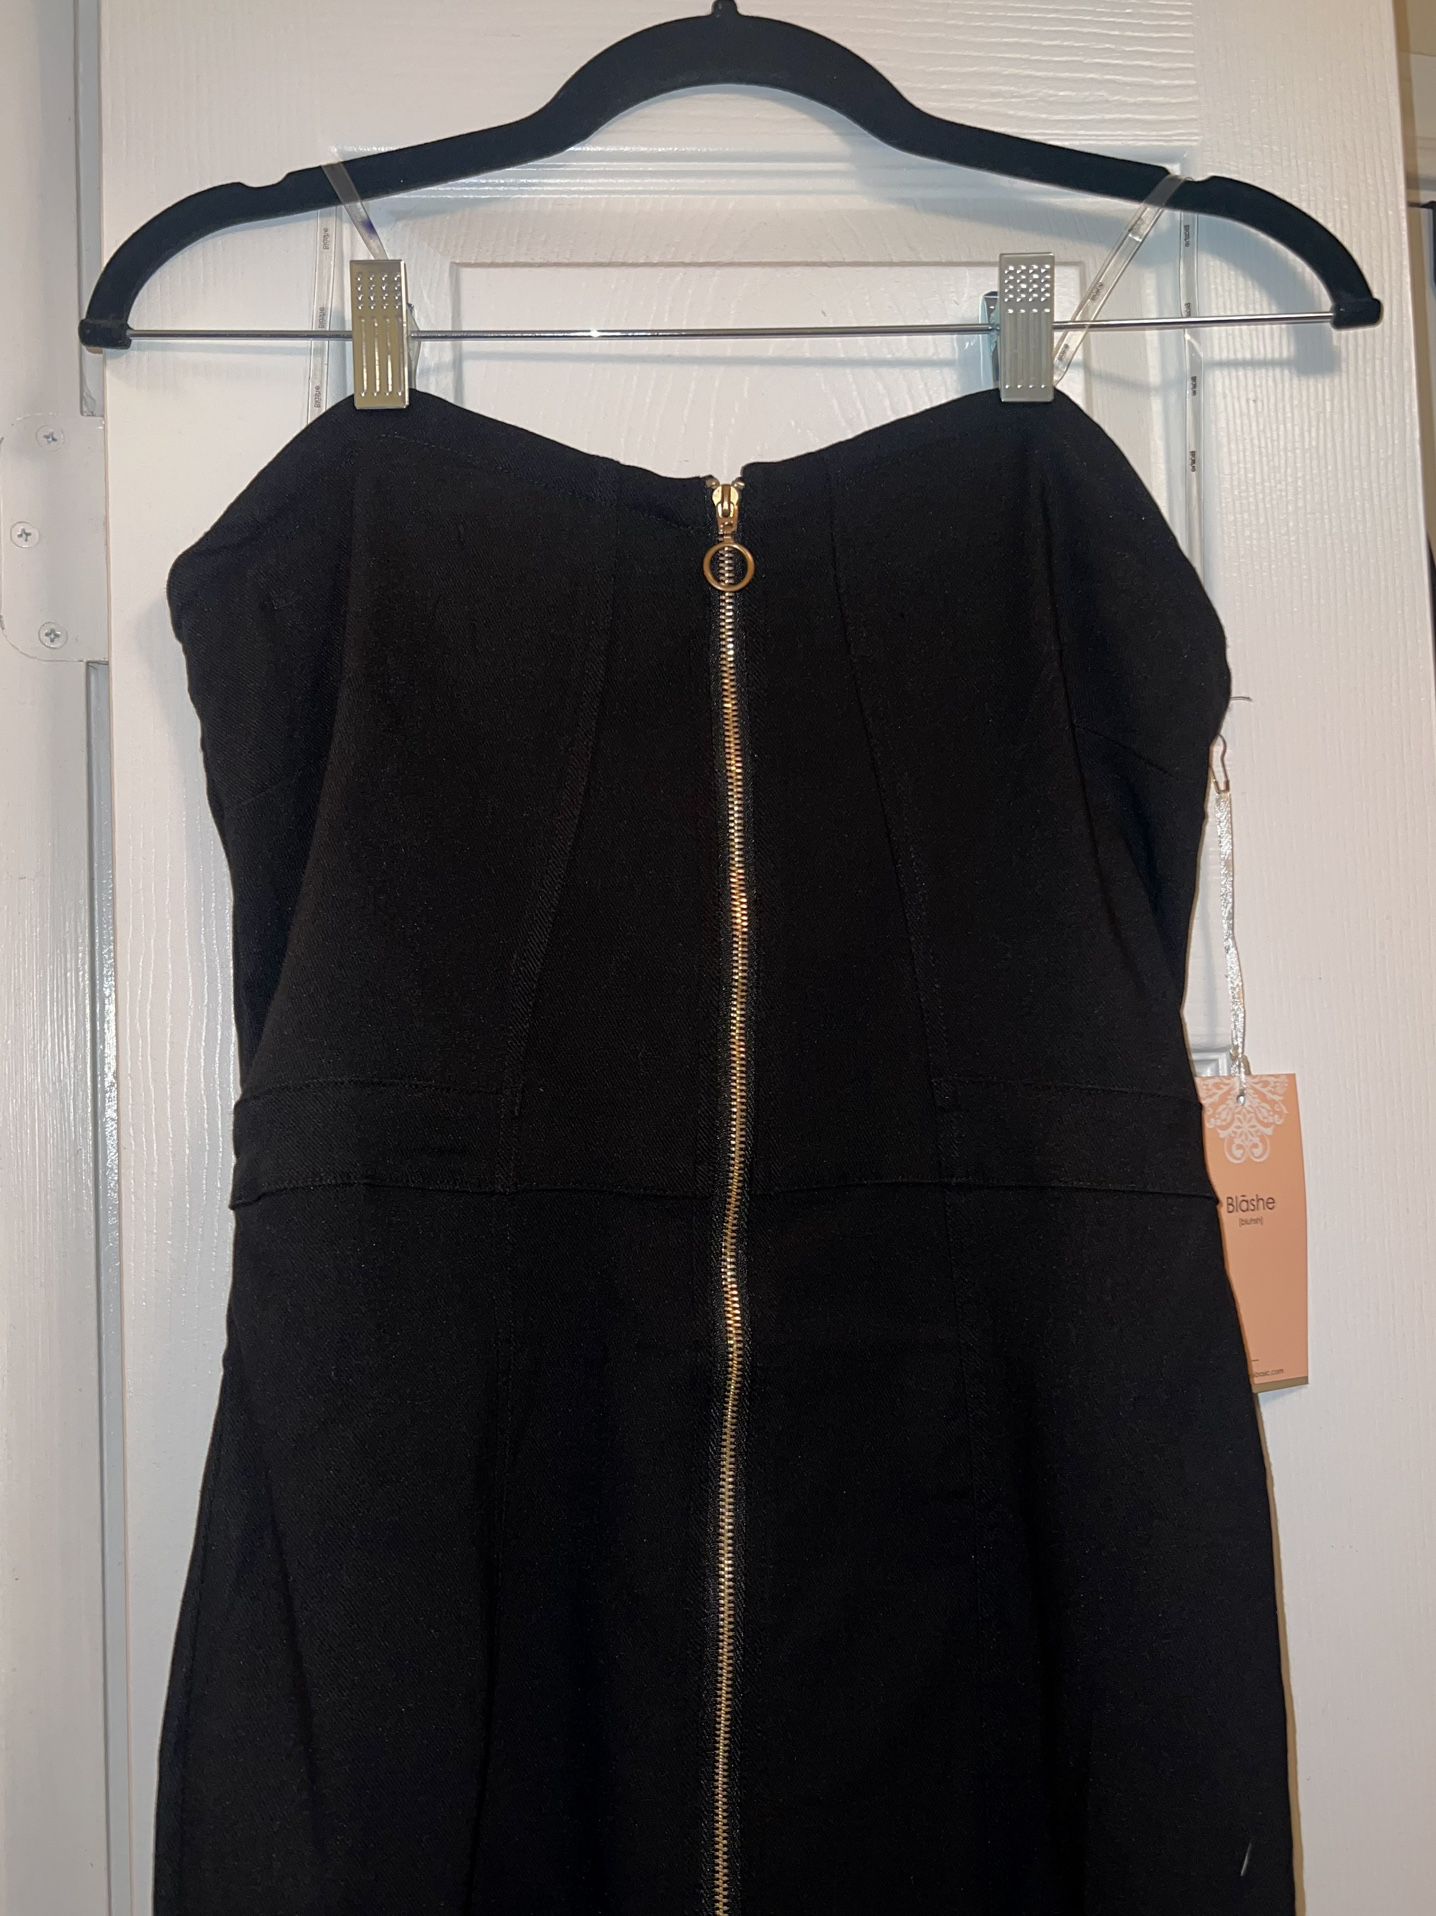 Strapless Black Mini Dress